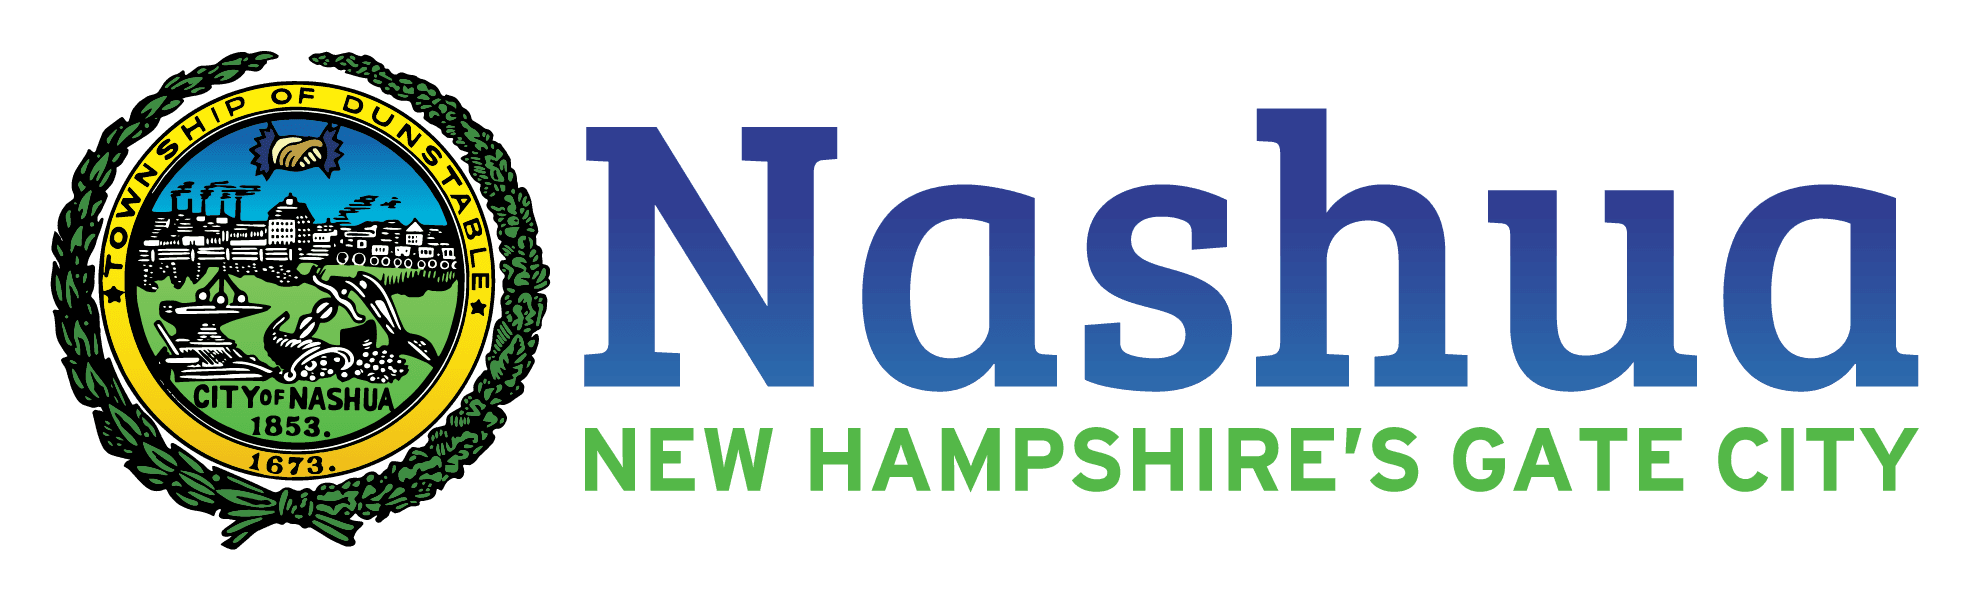 Find Us On Facebook Official Logo - Nashua, NH | Official Website